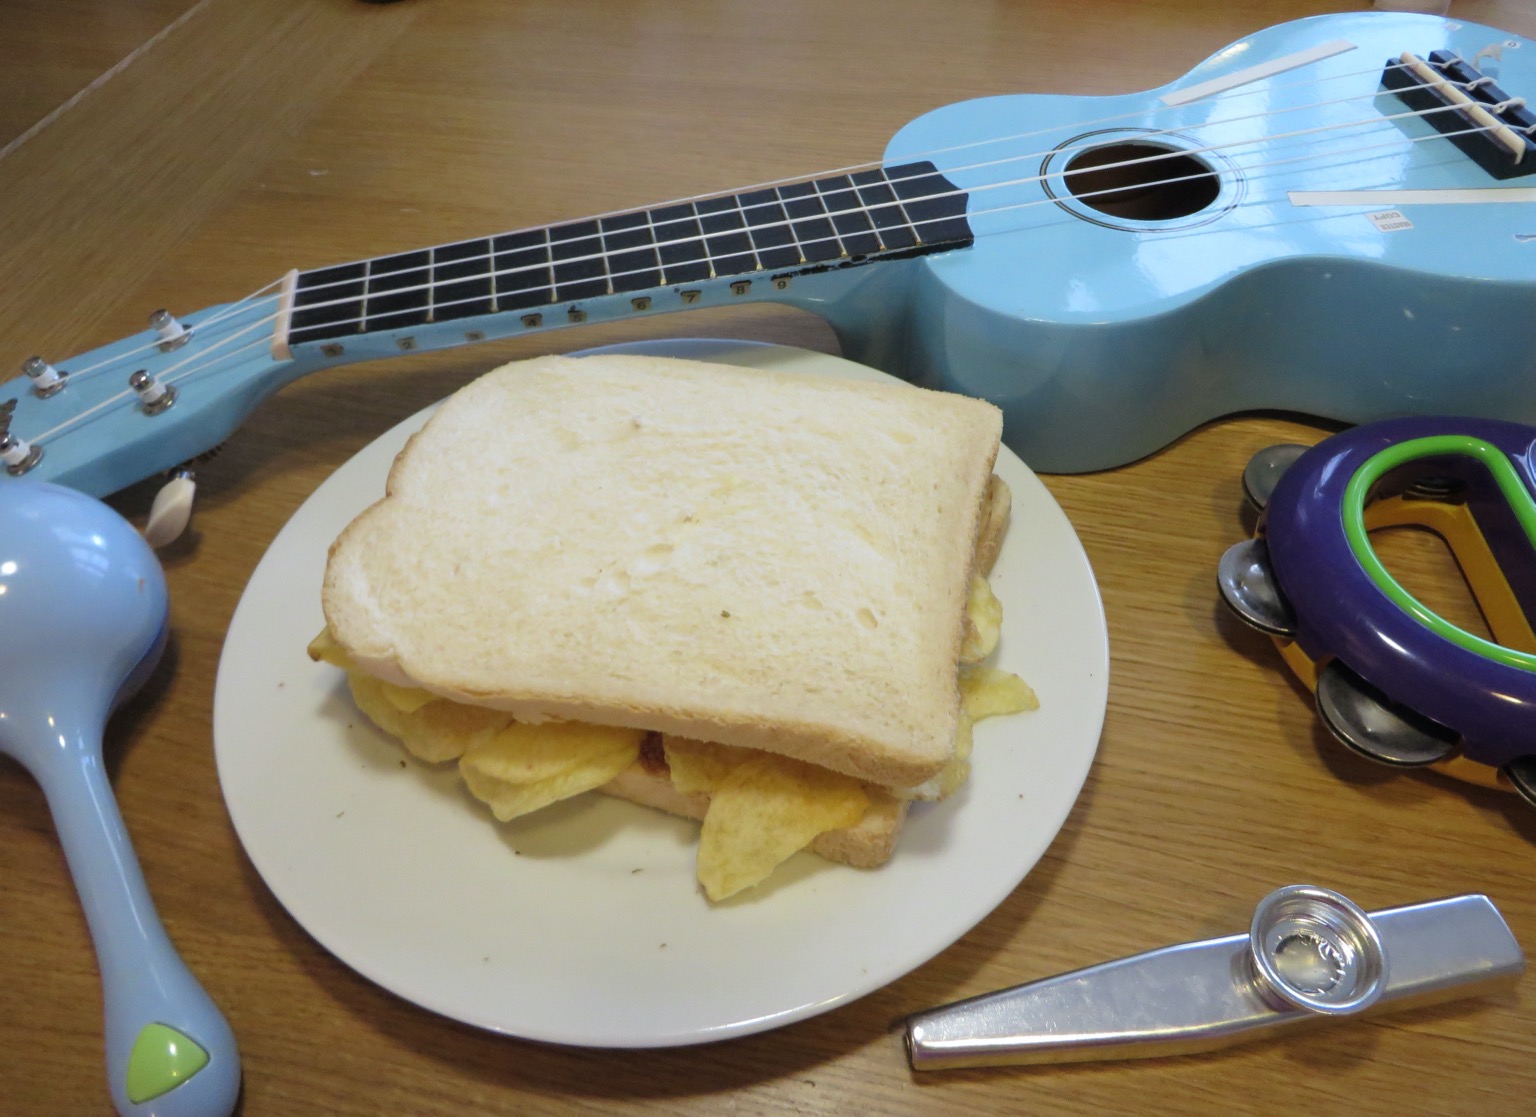 White crisp sandwich among musical instruments